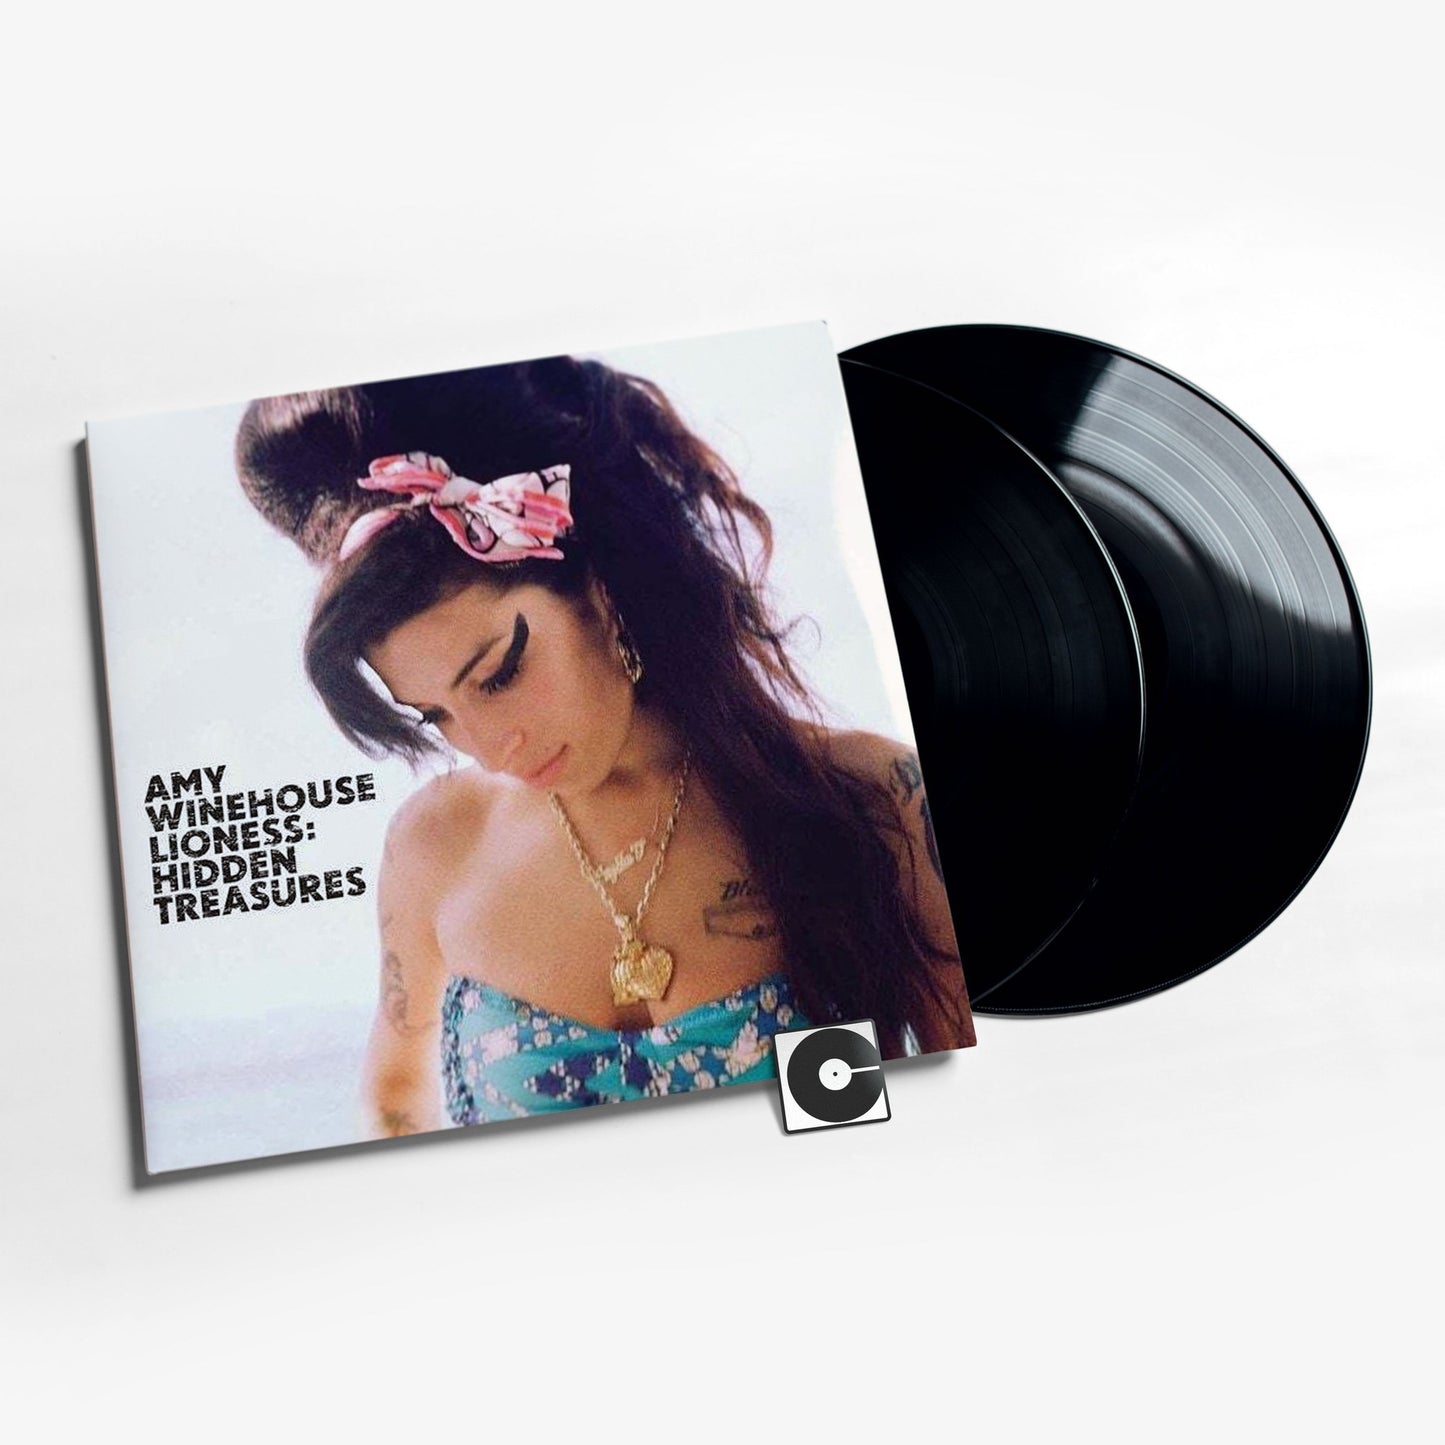 Amy Winehouse - "Lioness: Hidden Treasures"